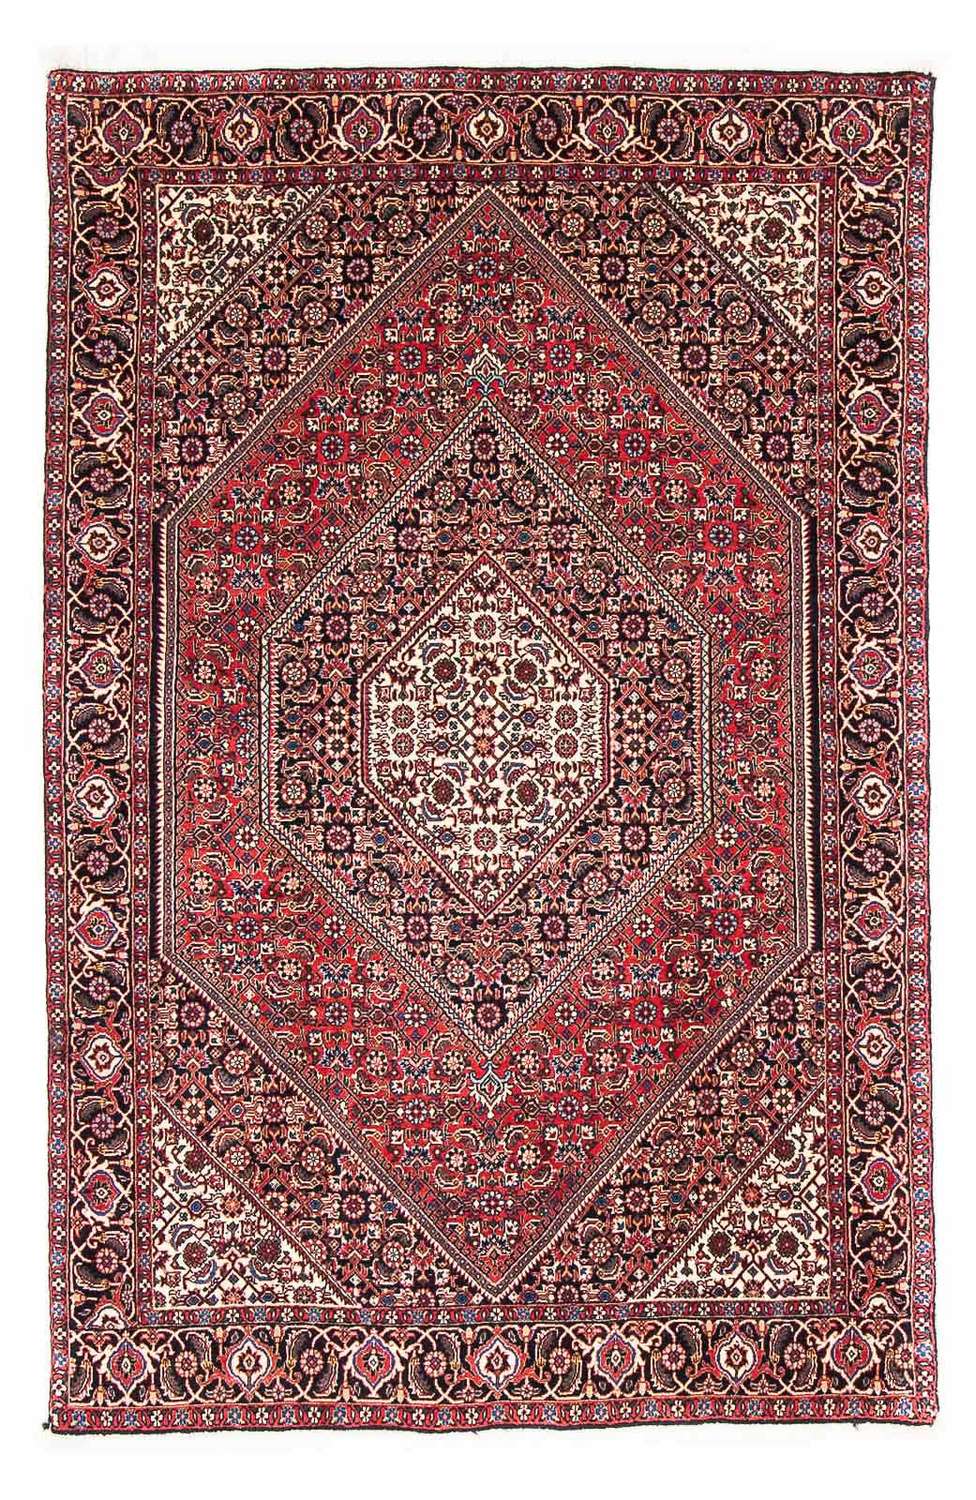 Persisk teppe - Bijar - 170 x 110 cm - rød